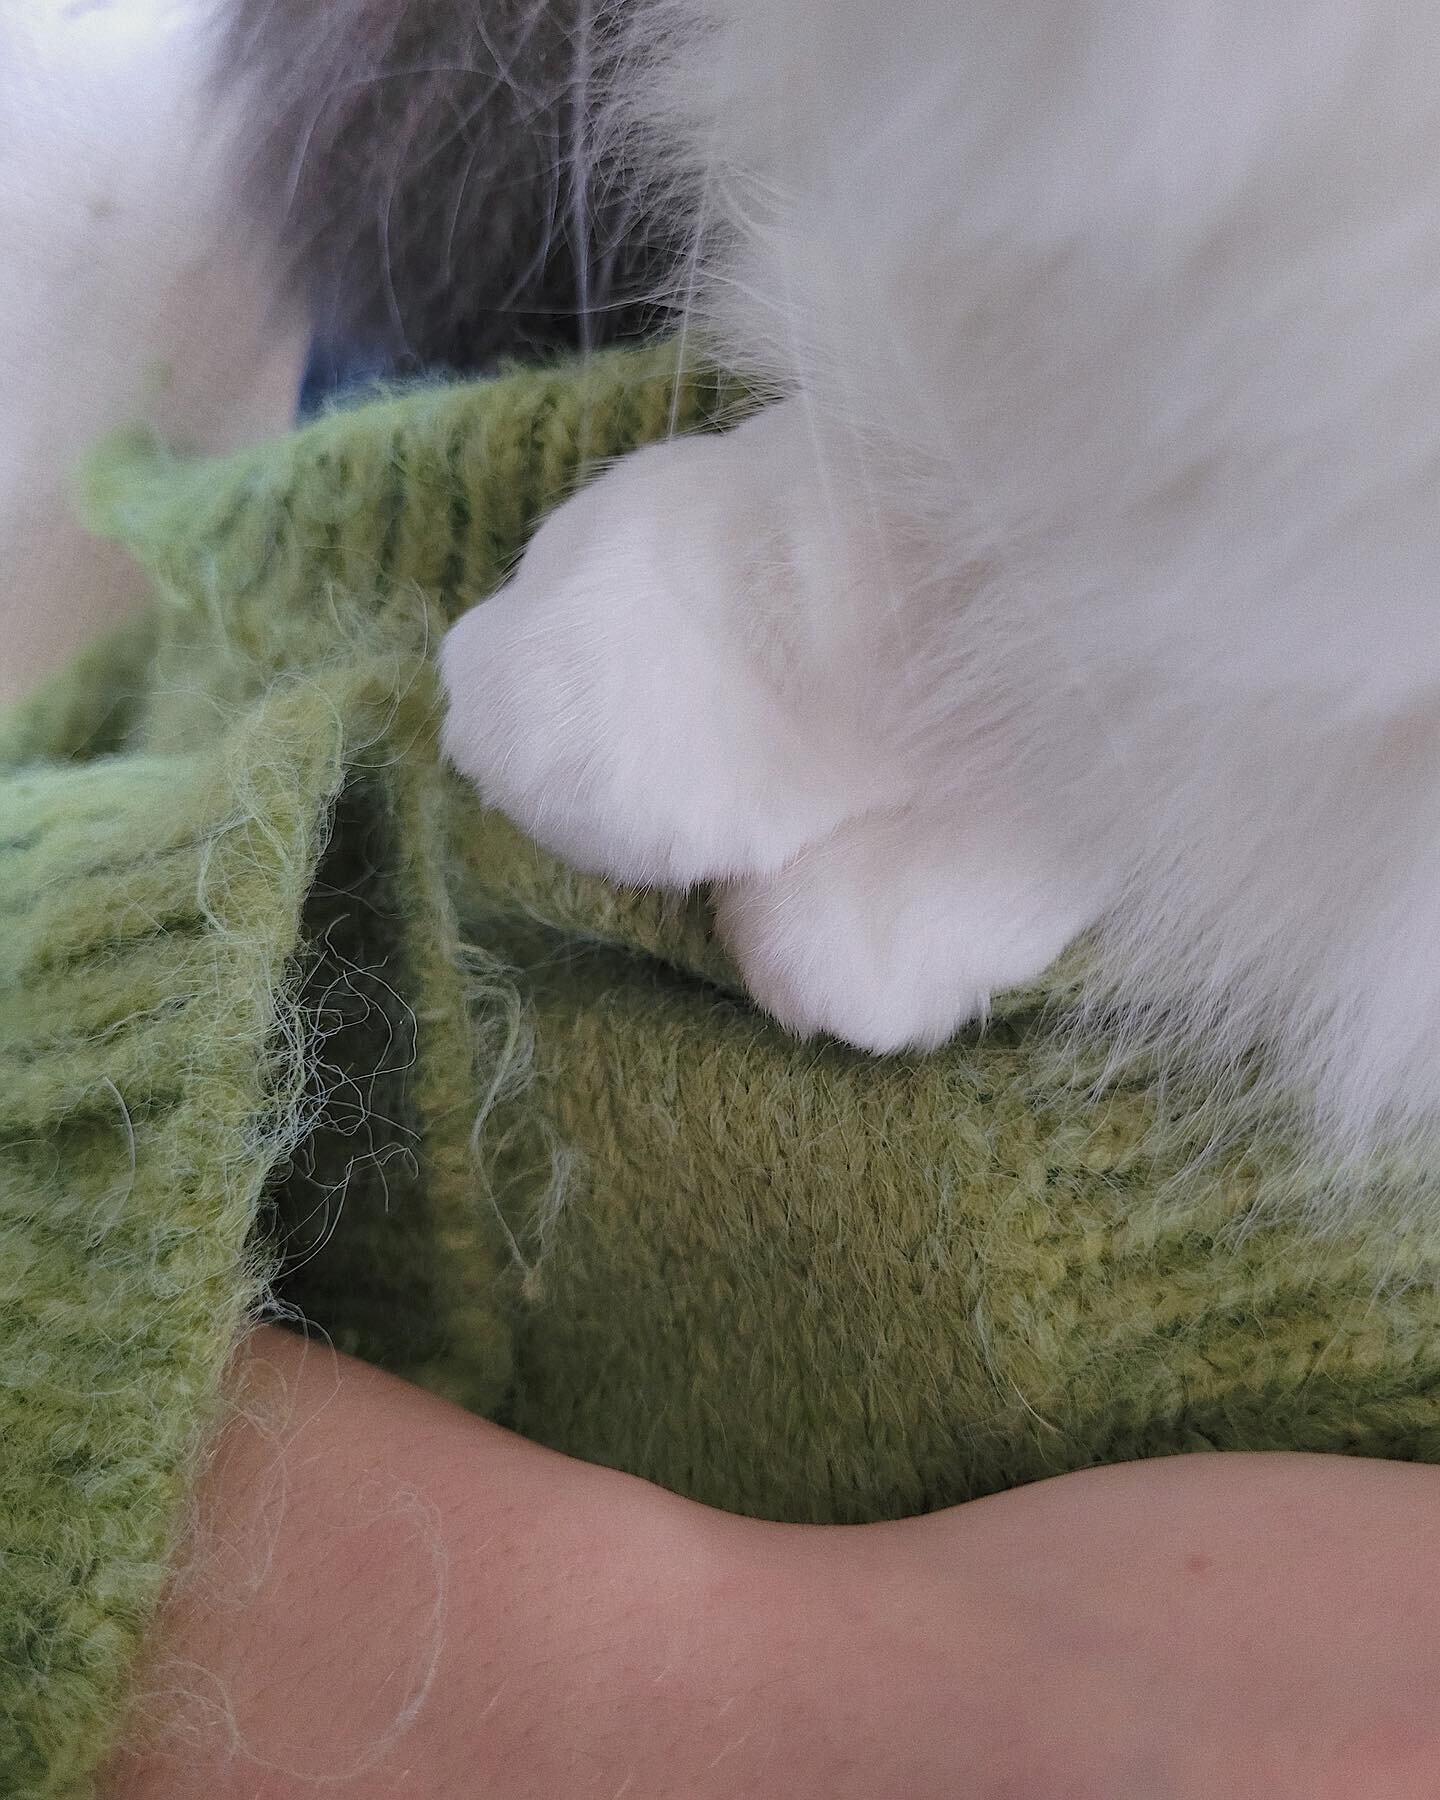 Patpatpat 🌿🐈
Flew qui pose sur mon nouveau gilet couleur cotyl&eacute;dons 🌱
.
.
.
.
#cat #cute #paws #tiny #smol #green #sweater #kitty #kitten #spring #smallbusiness #moment #inspo #pinterest #fluff #fluffycat #fluffy #color #white #adorable #lo